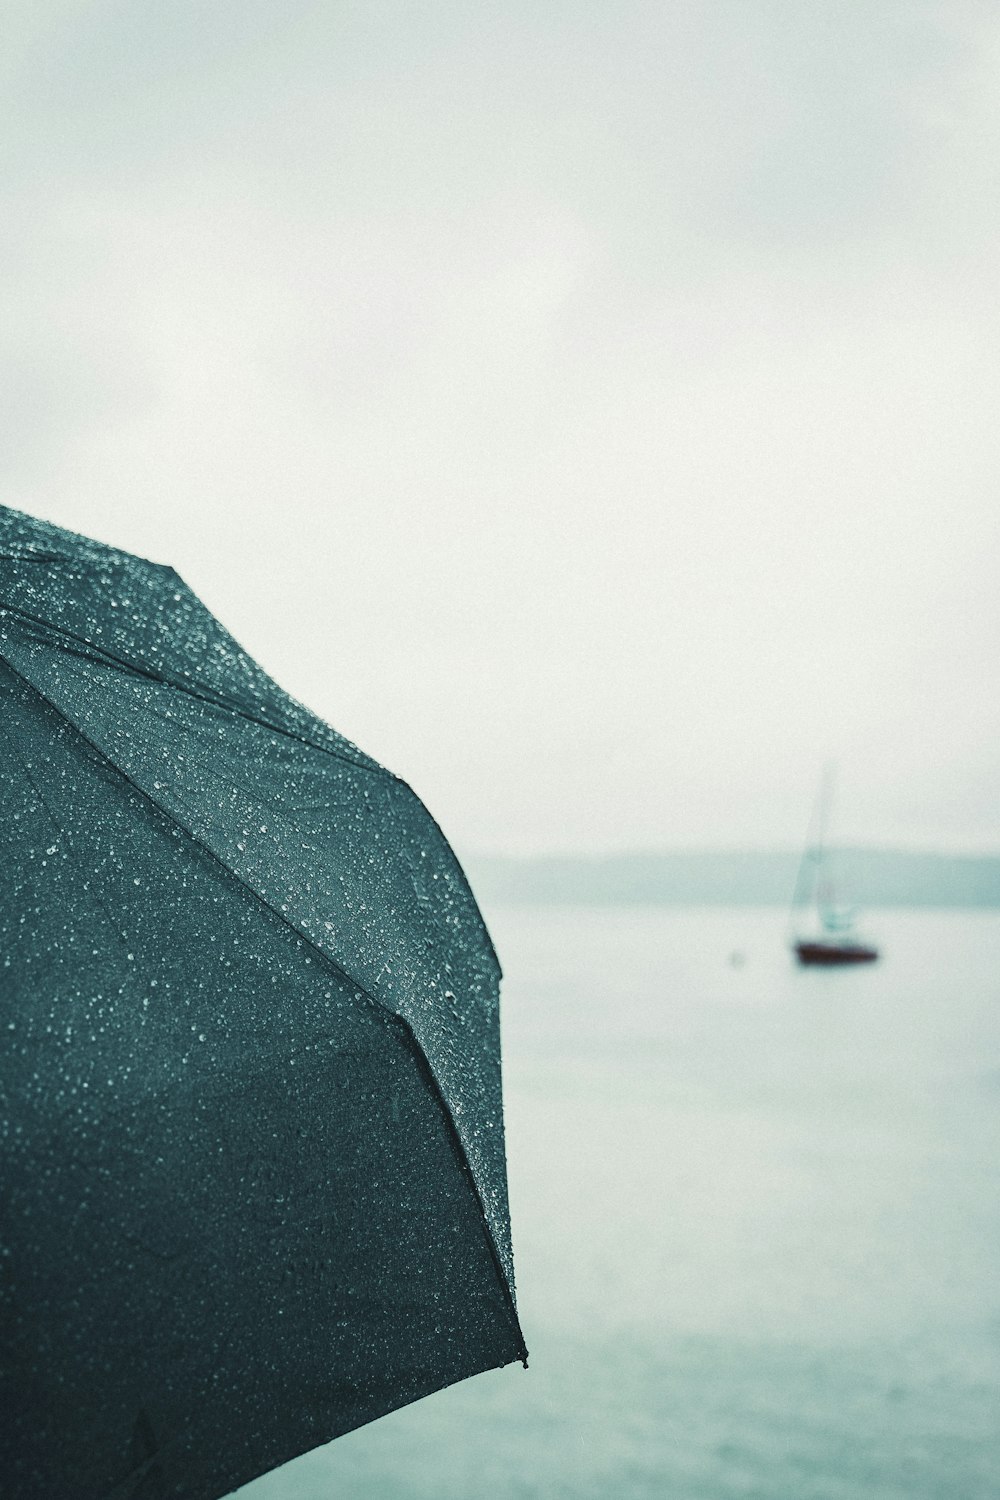 black umbrella near body of water during daytime